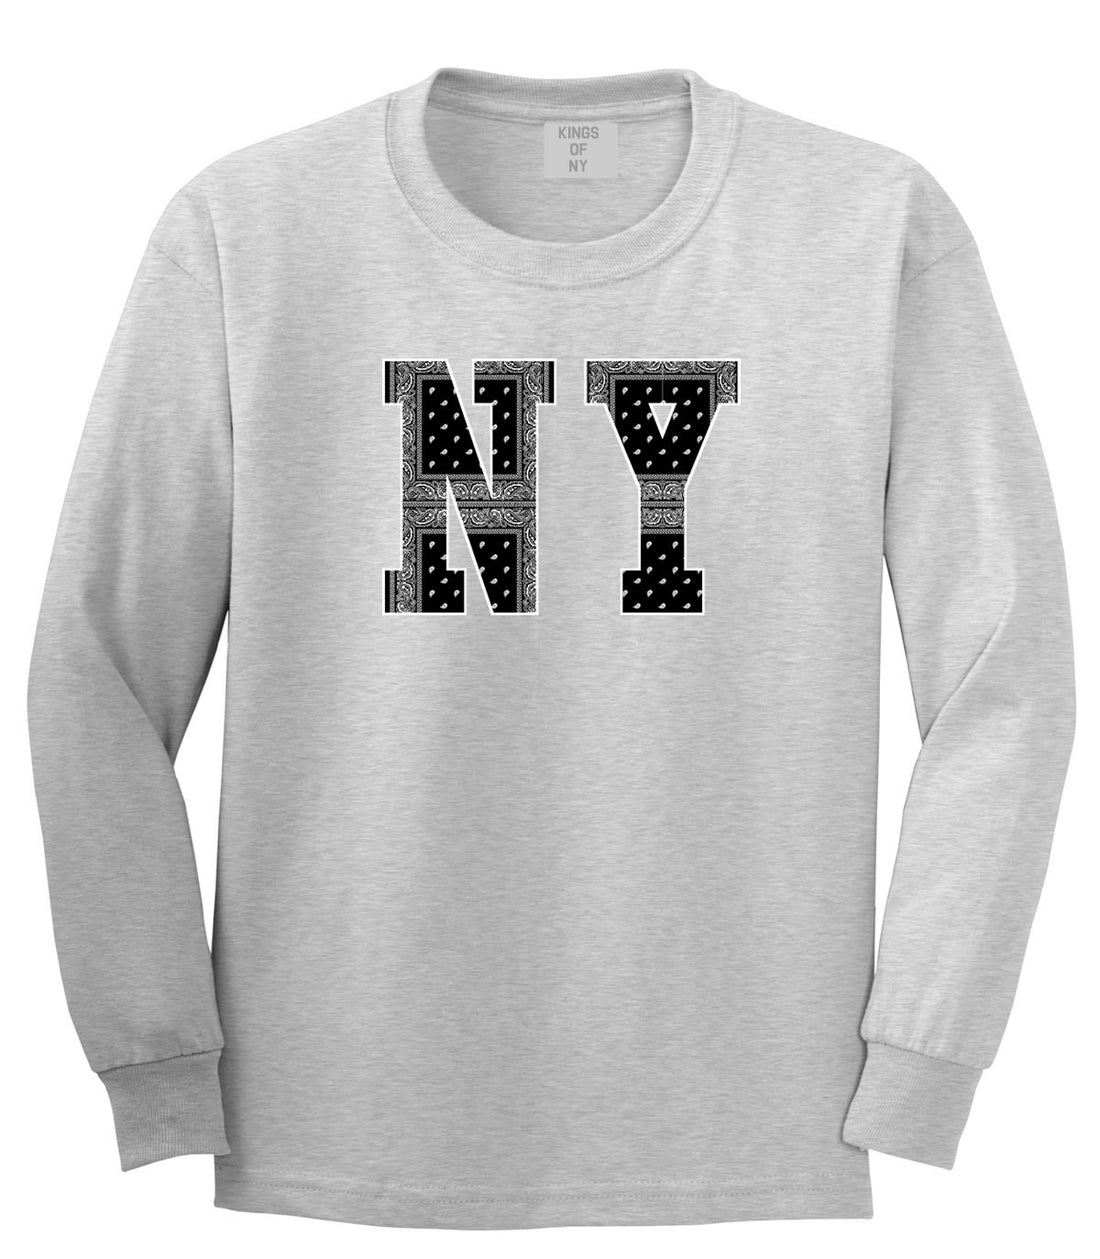 New York Bandana NYC Black by Kings Of NY Gang Flag Long Sleeve T-Shirt In Grey by Kings Of NY